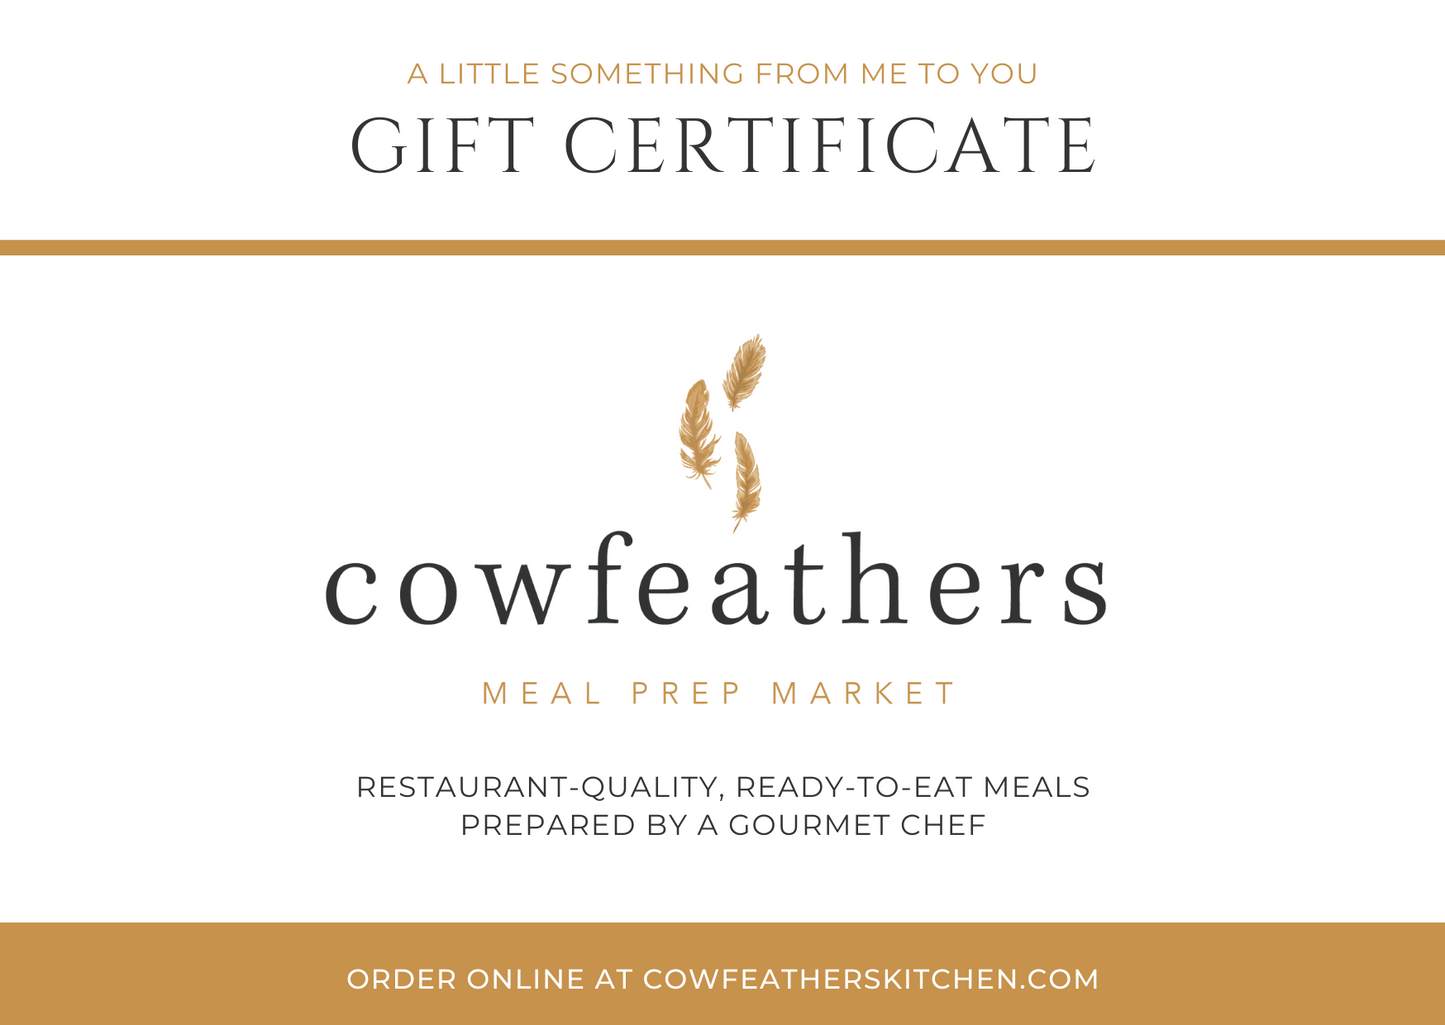 Cowfeathers E-Gift Card